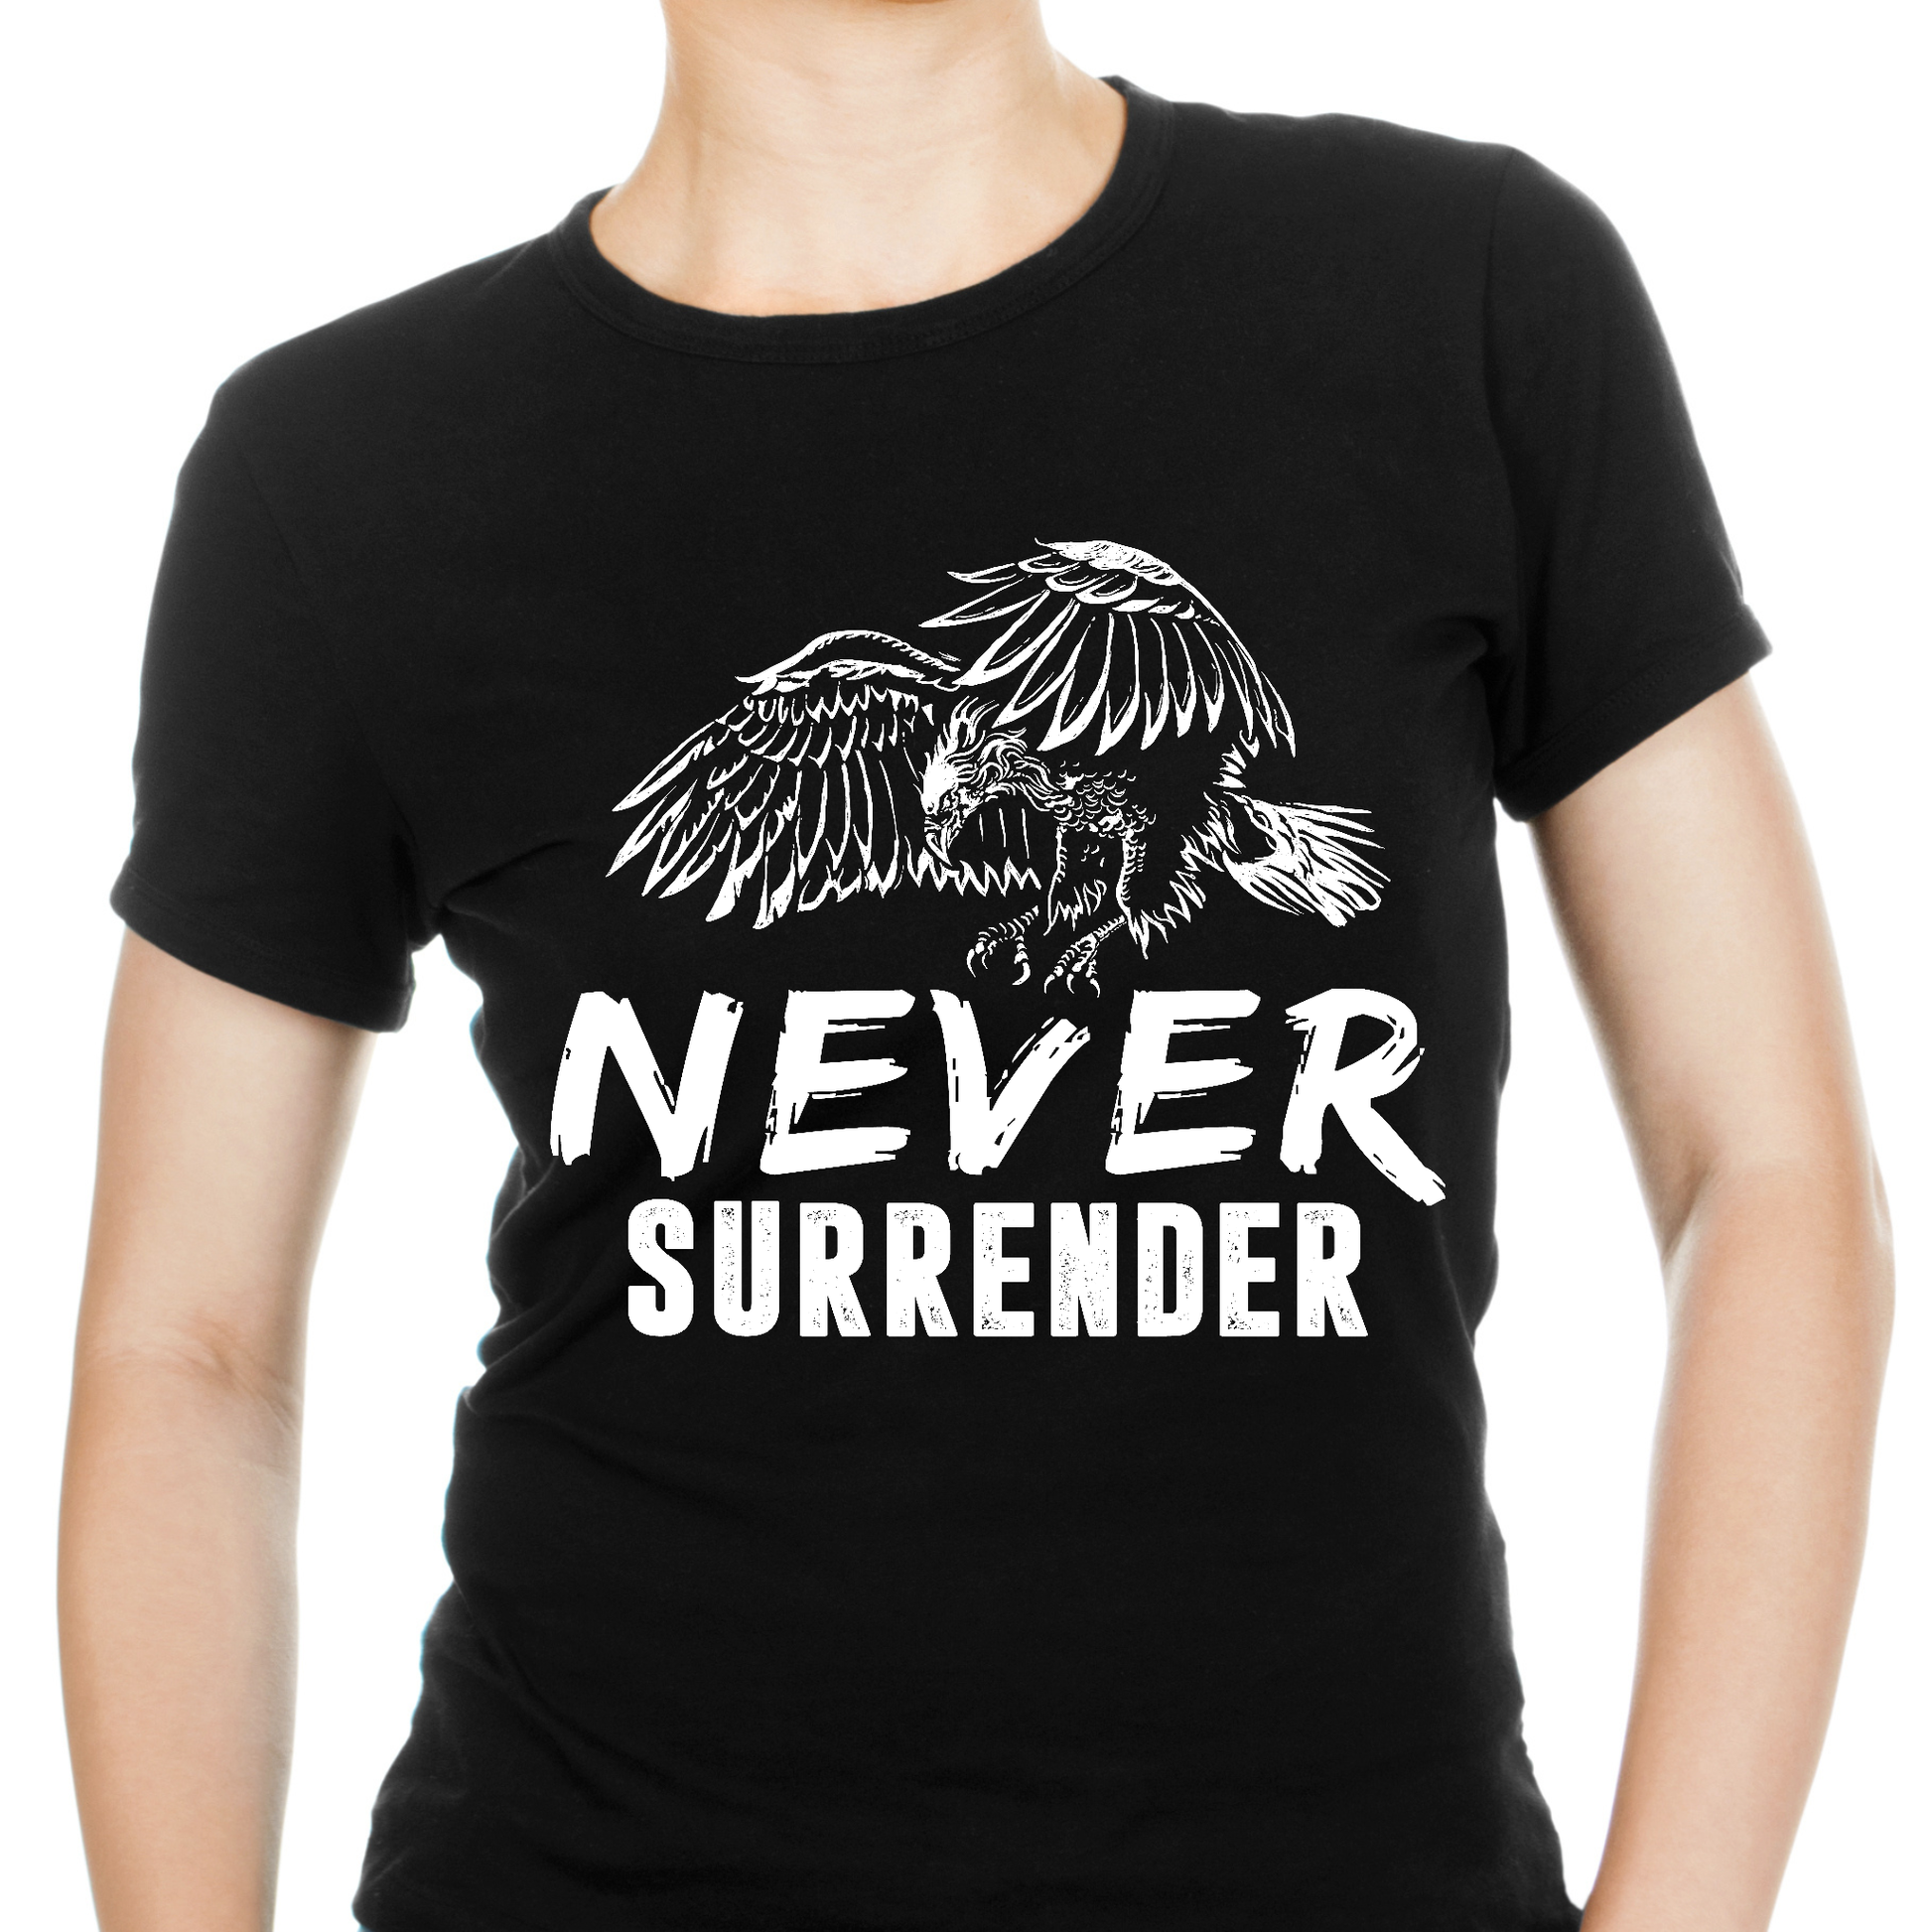 Never surrender motivational Women's t-shirt - Premium t-shirt from Lees Krazy Teez - Just $19.95! Shop now at Lees Krazy Teez